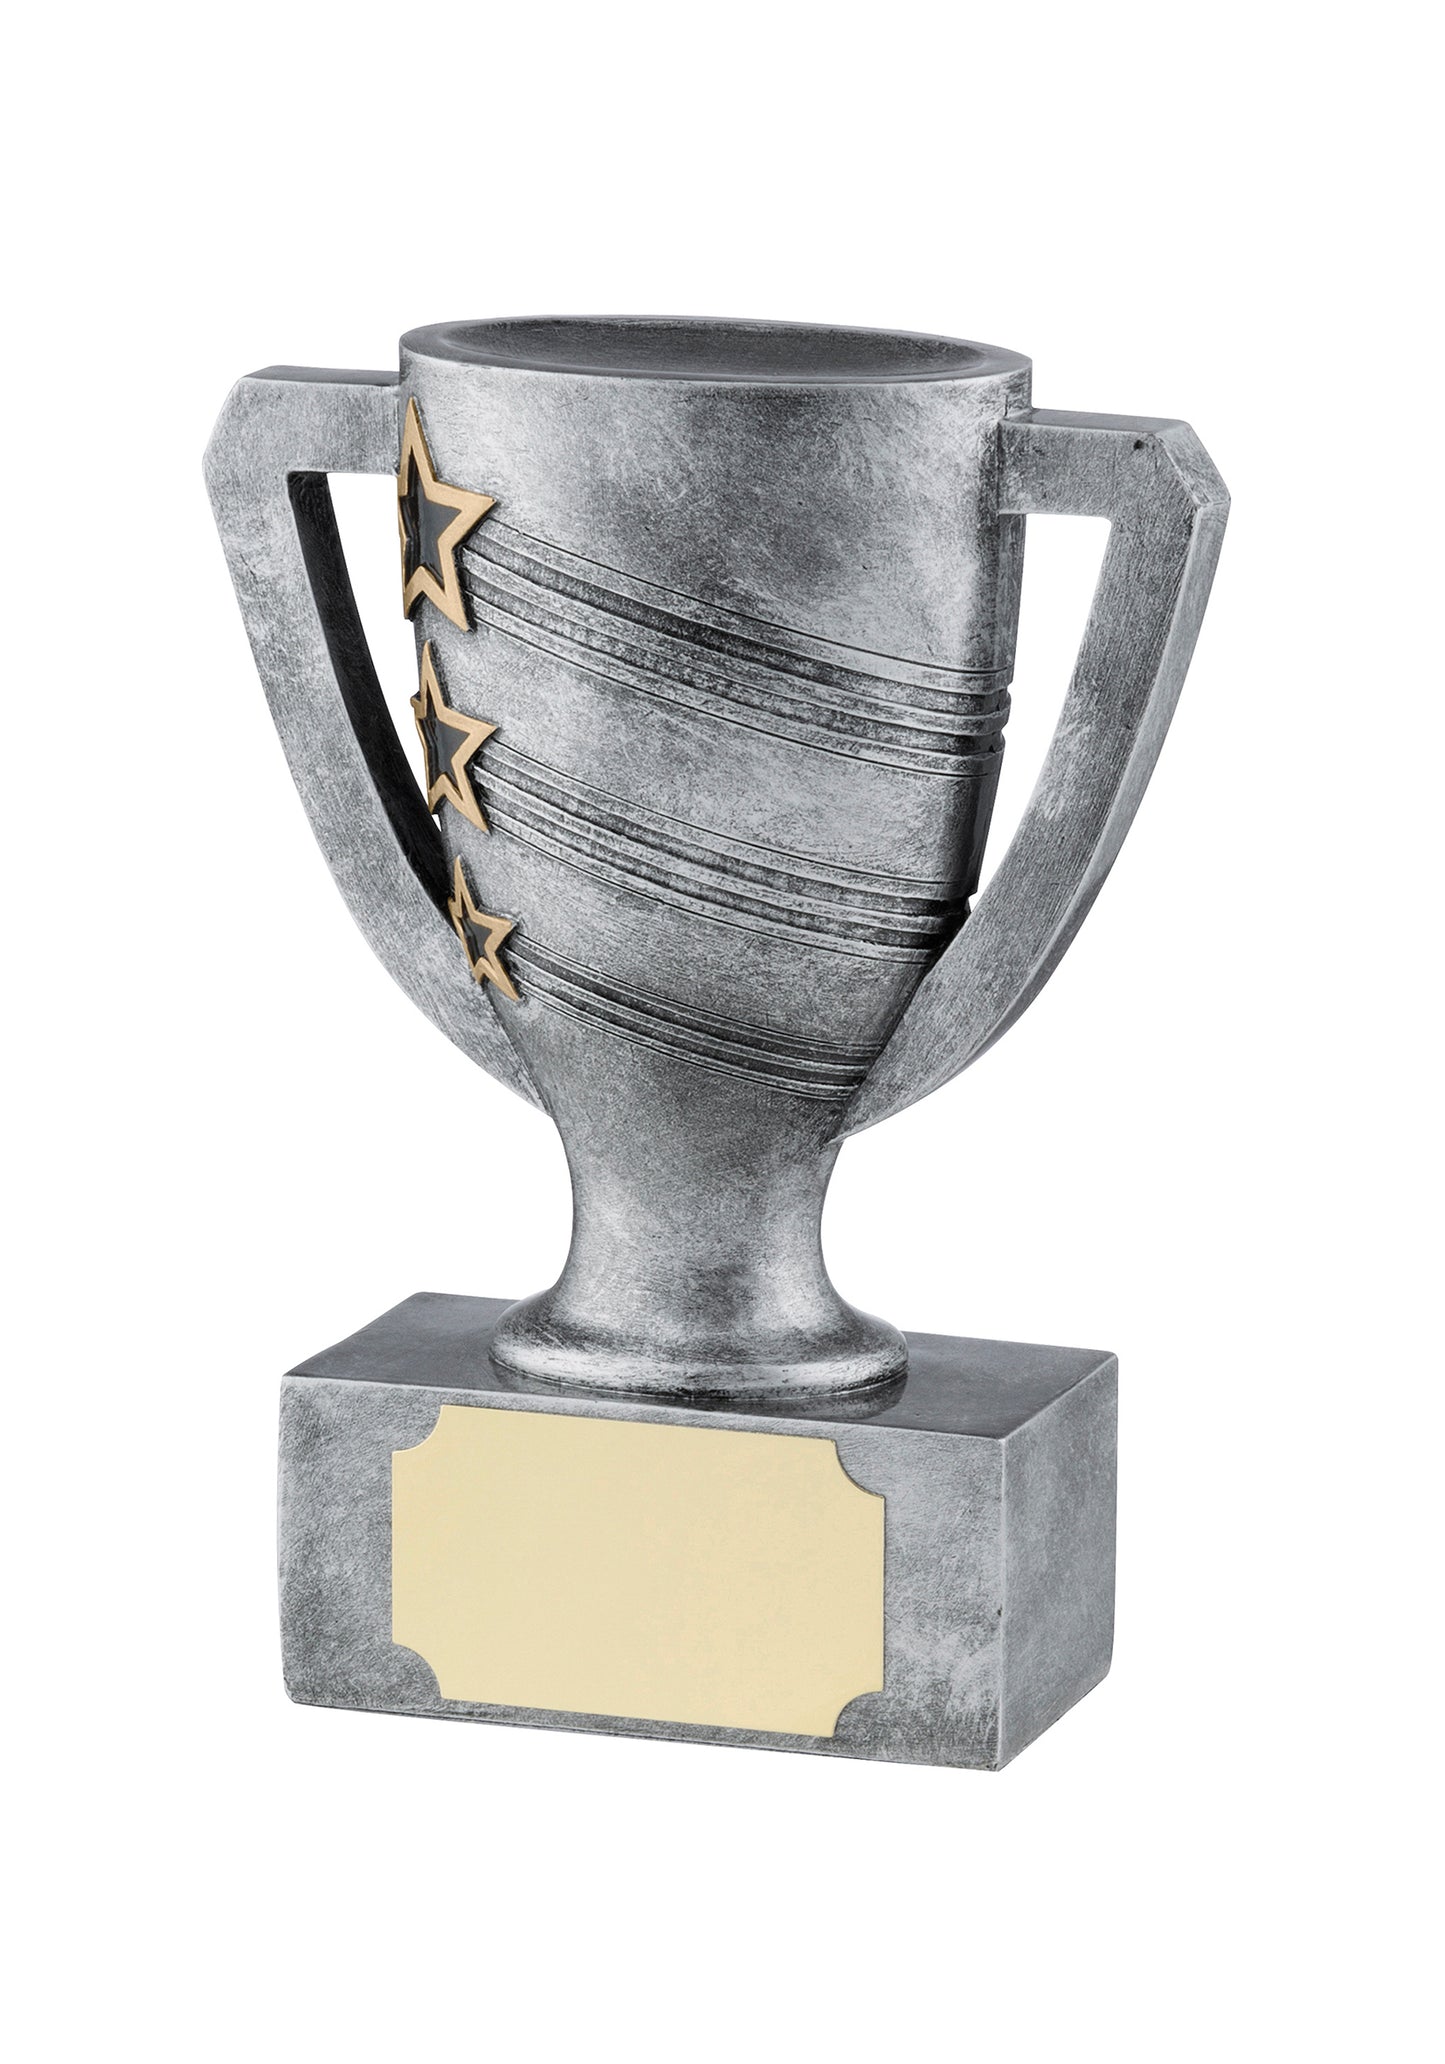 MB 15.5cm Cup Award